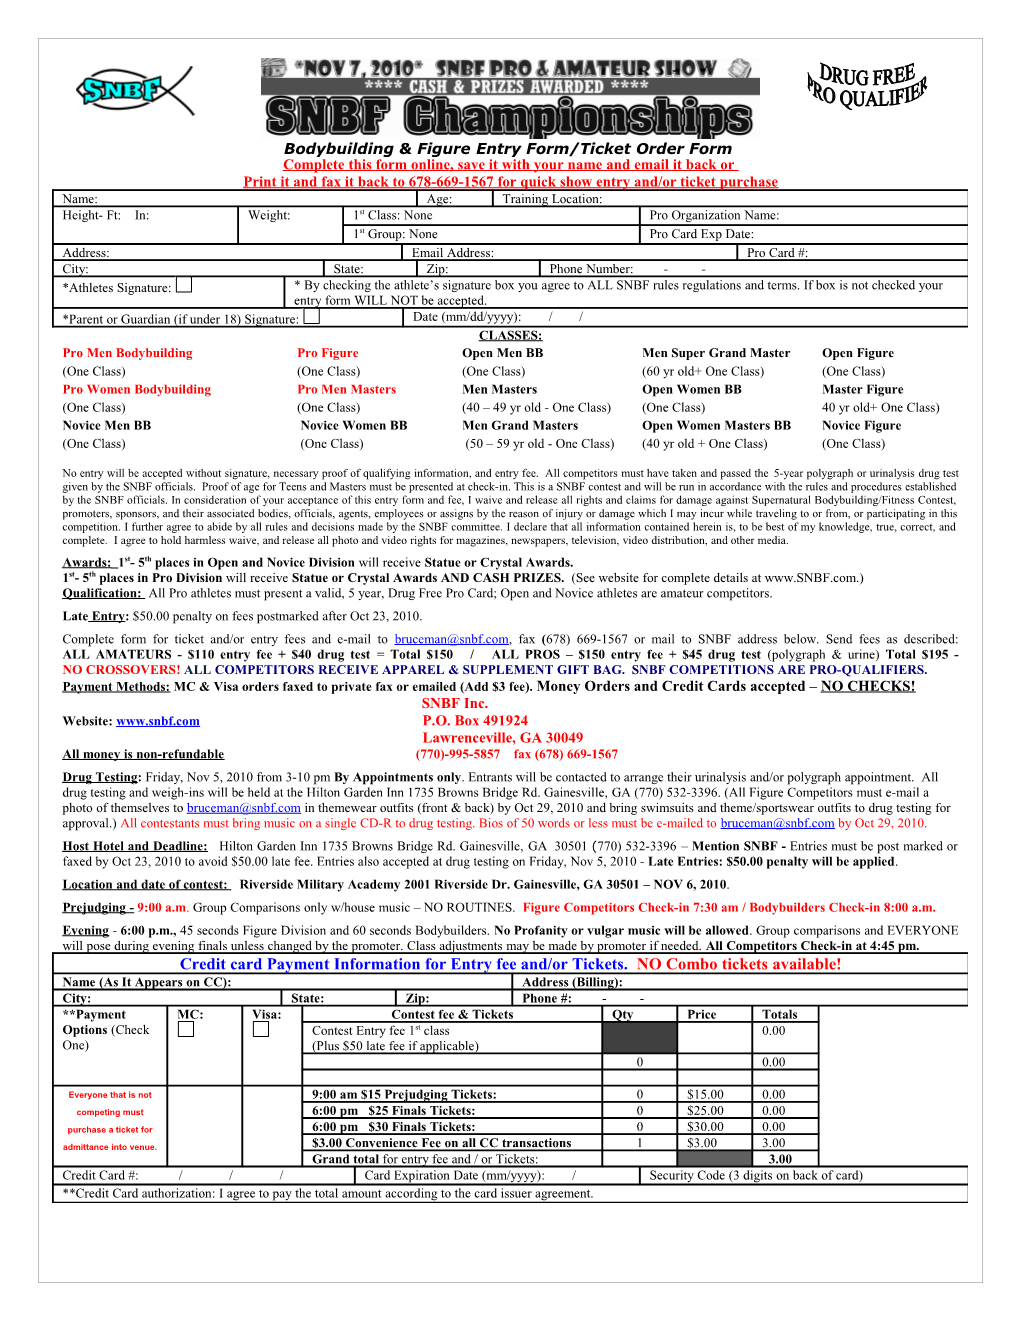 Bodybuilding & Figureentry Form/Ticket Order Form